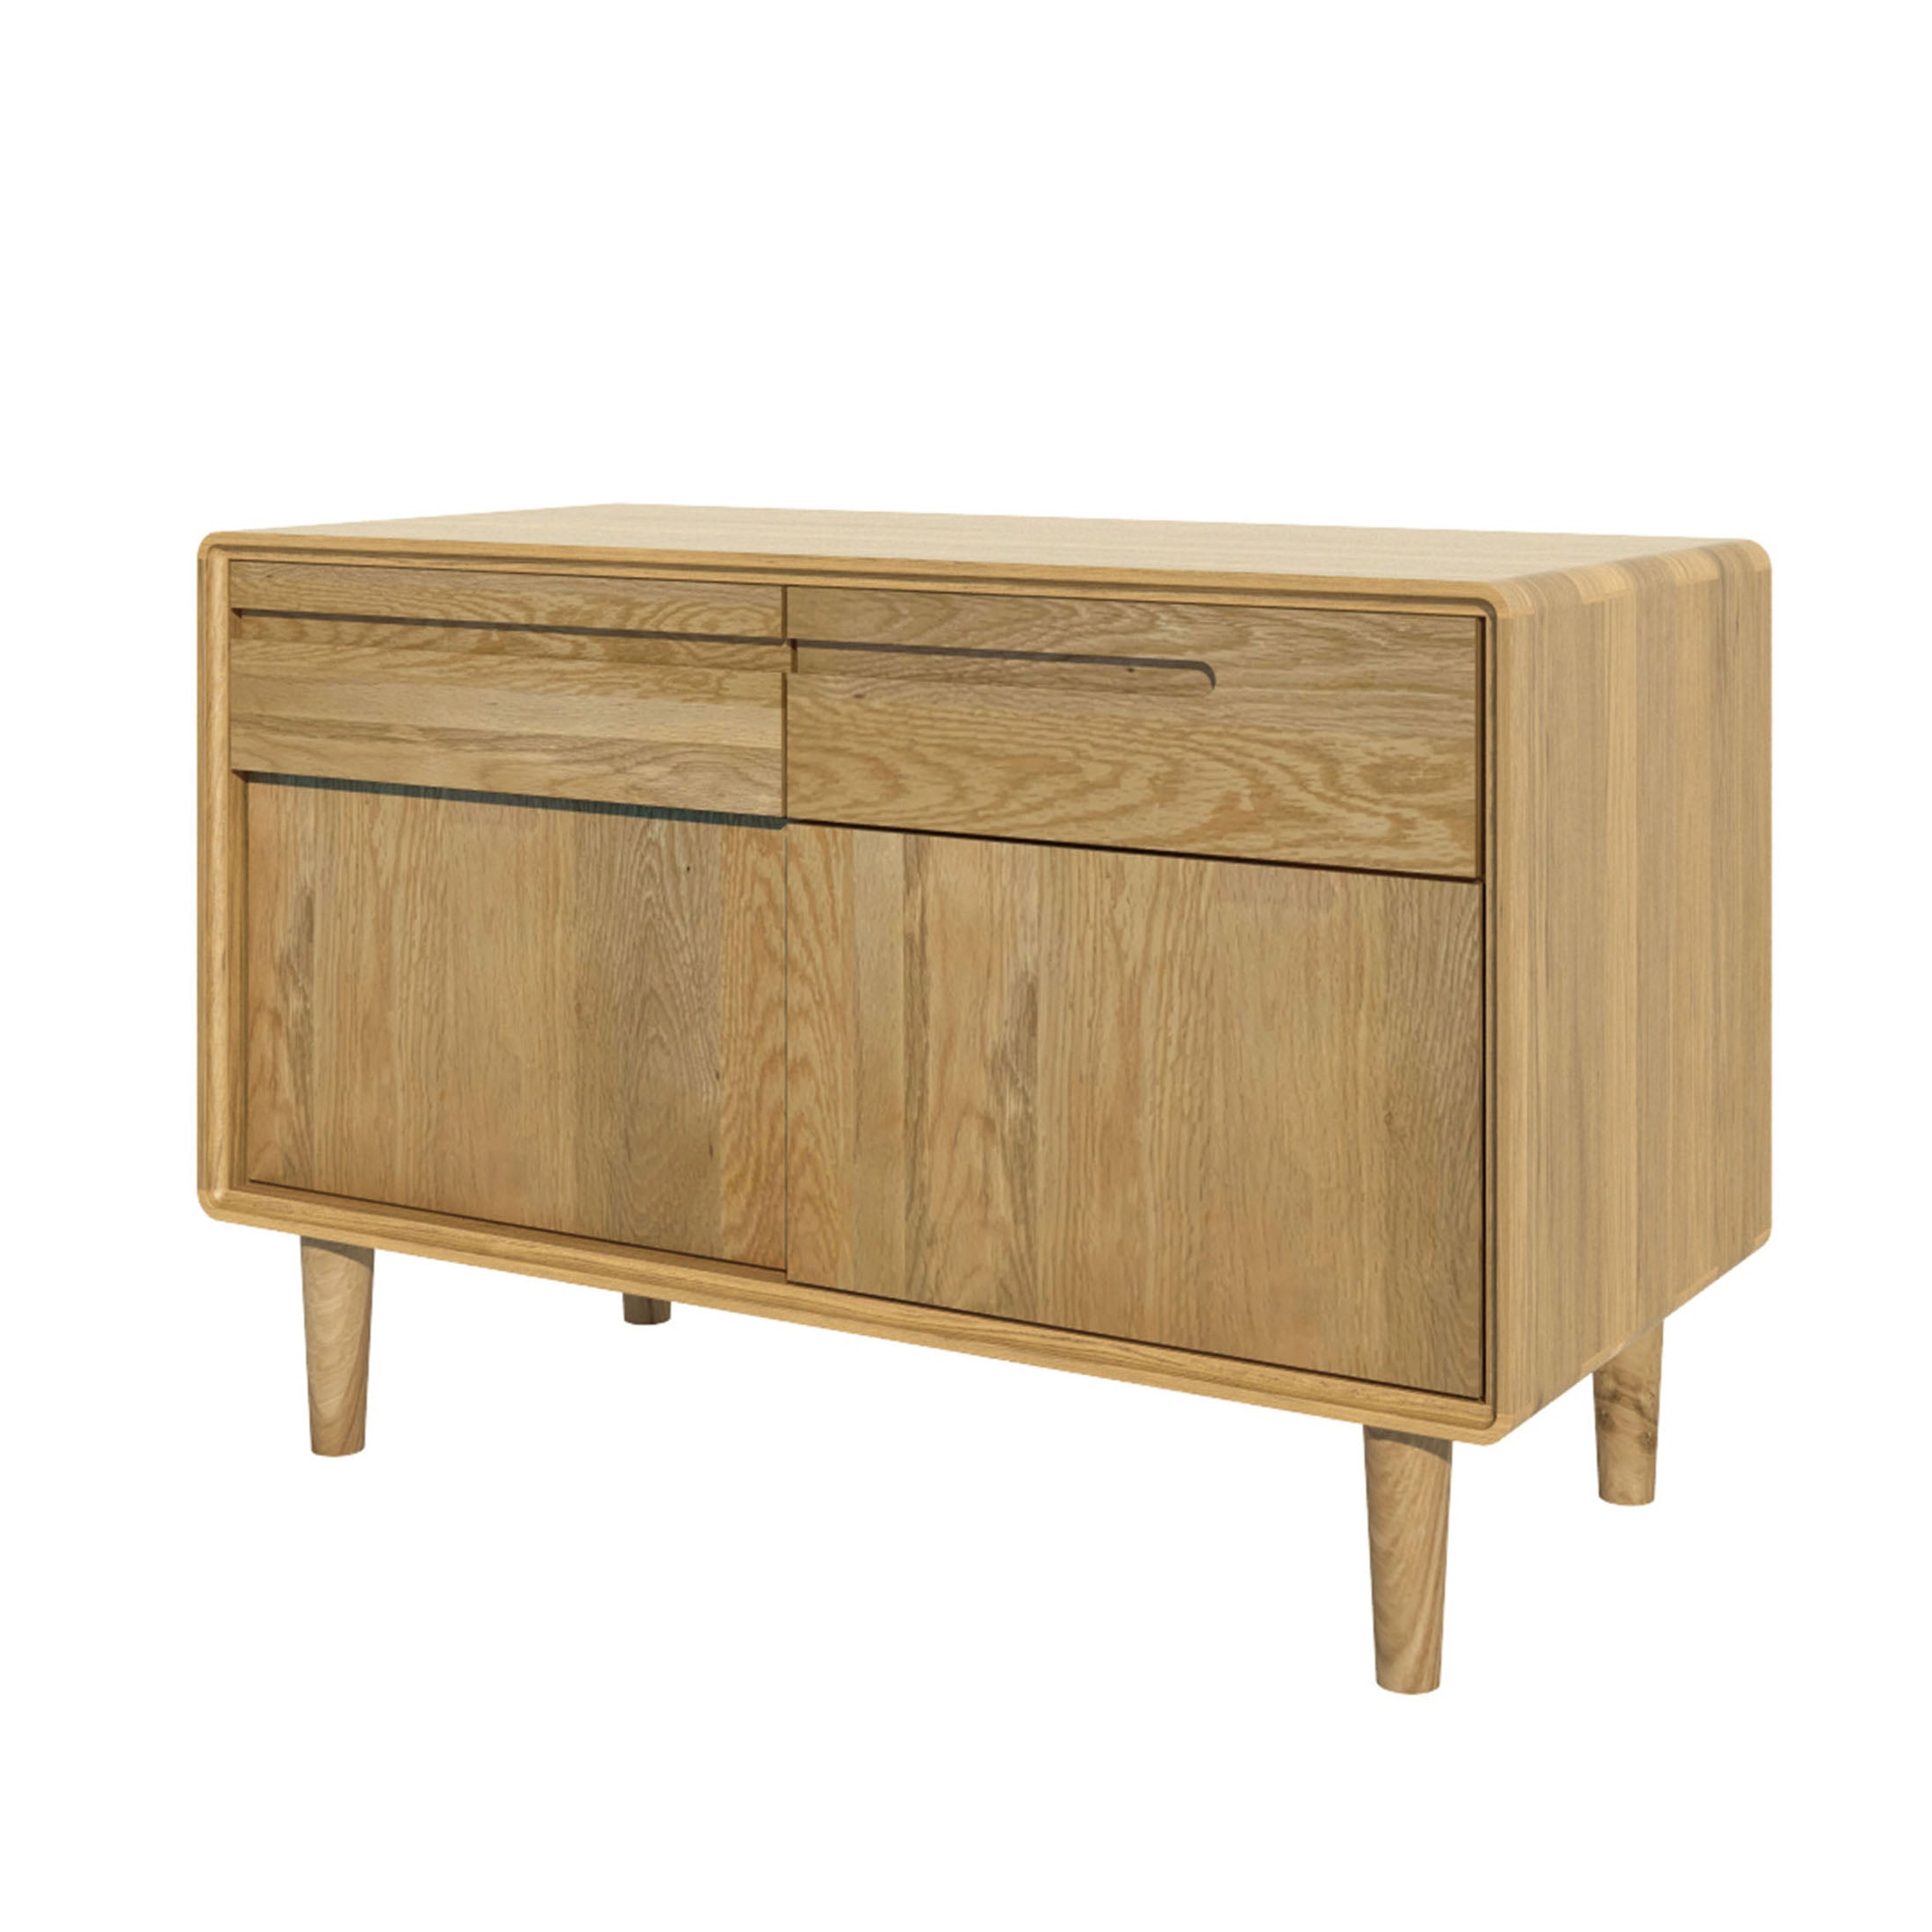 Nordic Scandic Oak narrow sideboard Furniture from Top Secret Furniture